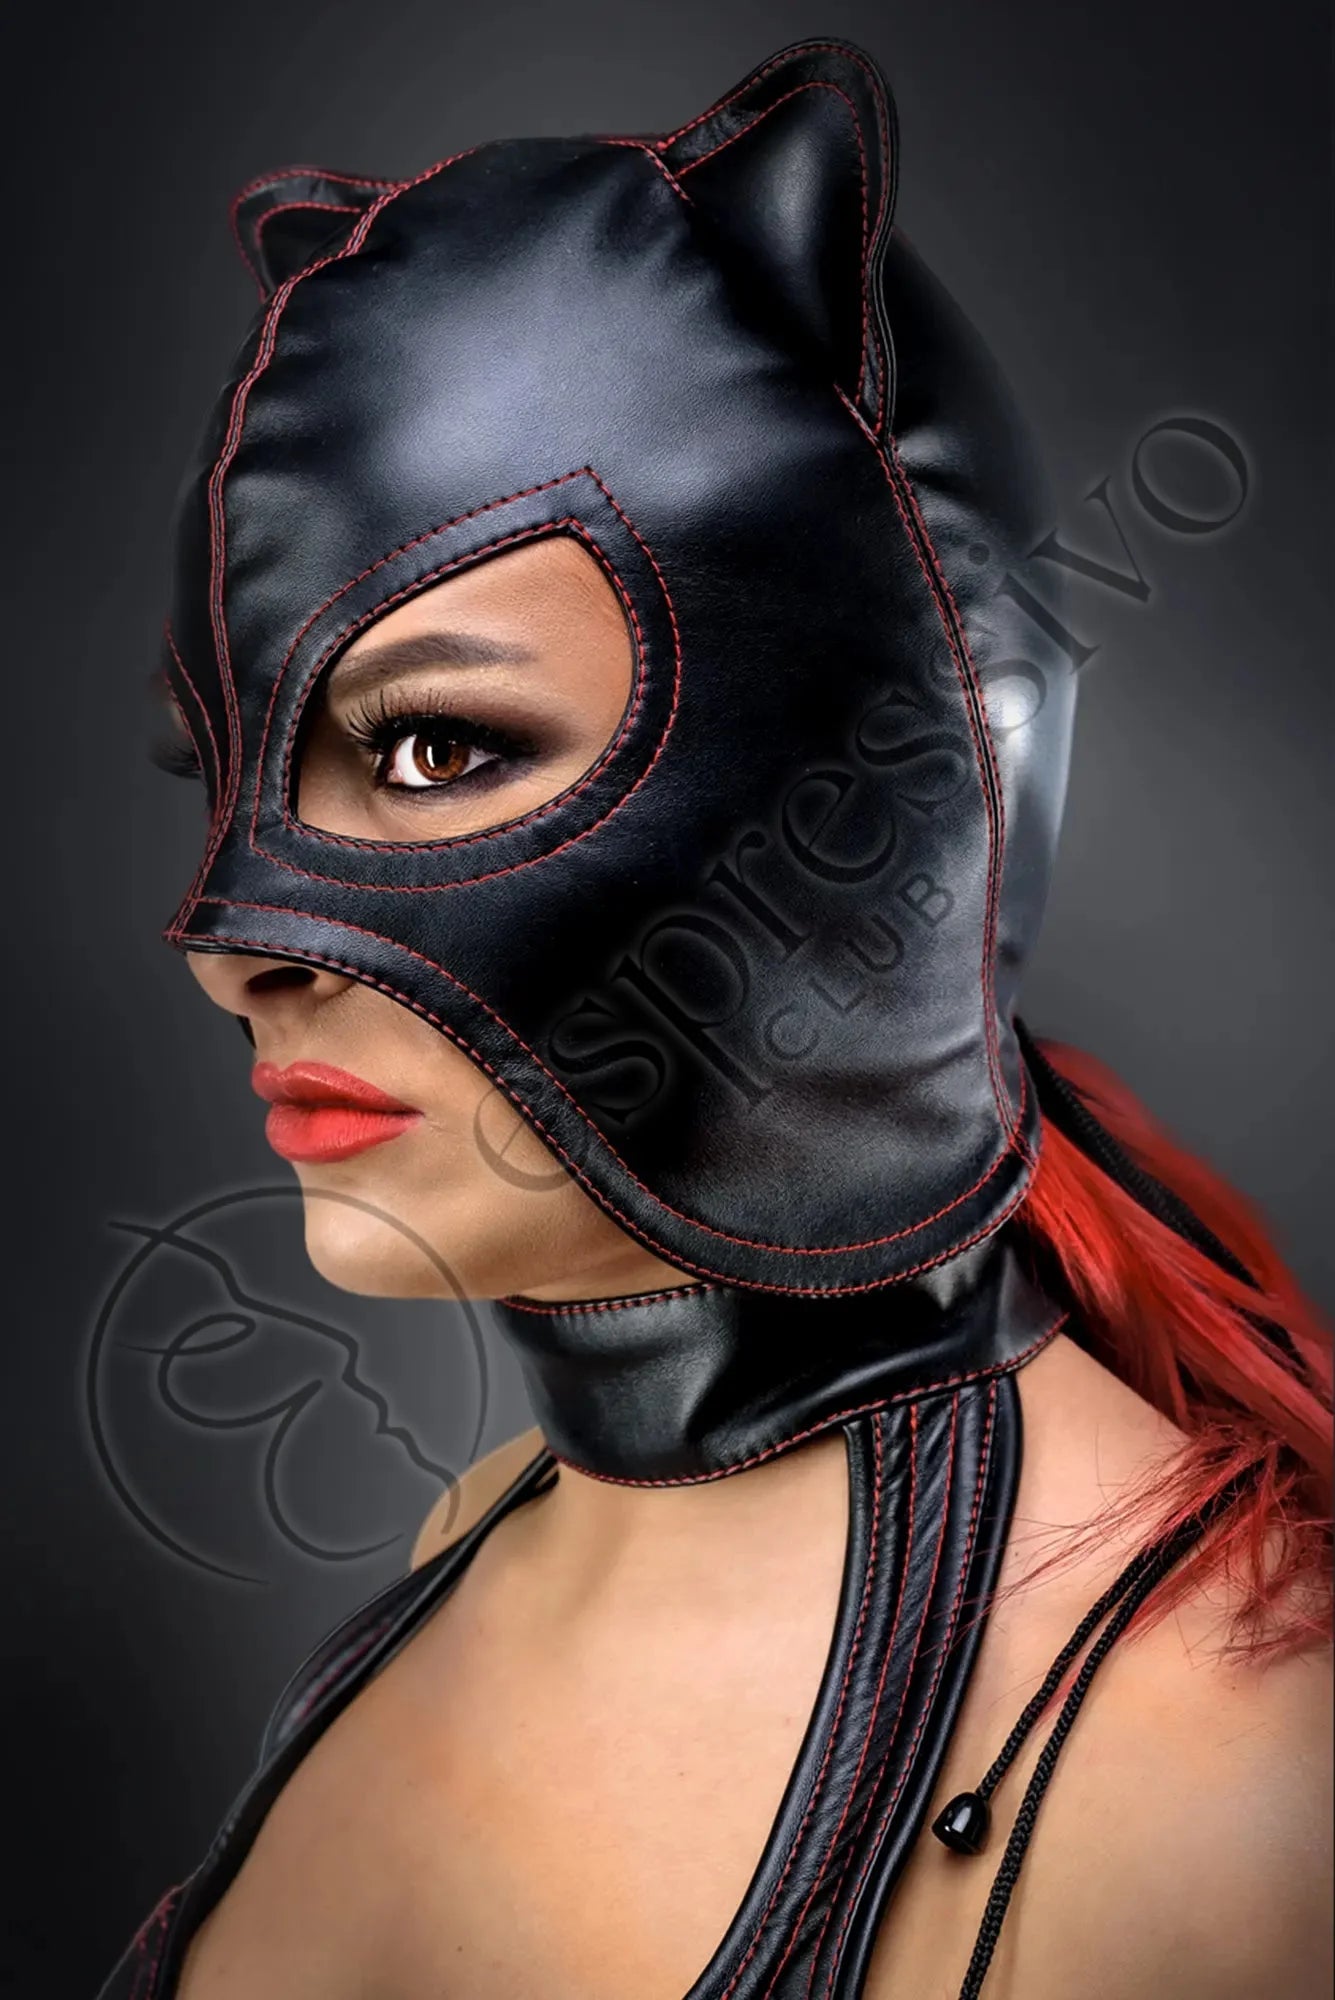 EspressivoClub Black Leather Bdsm Catwoman Mask For Pet Play Masks 176 - 4